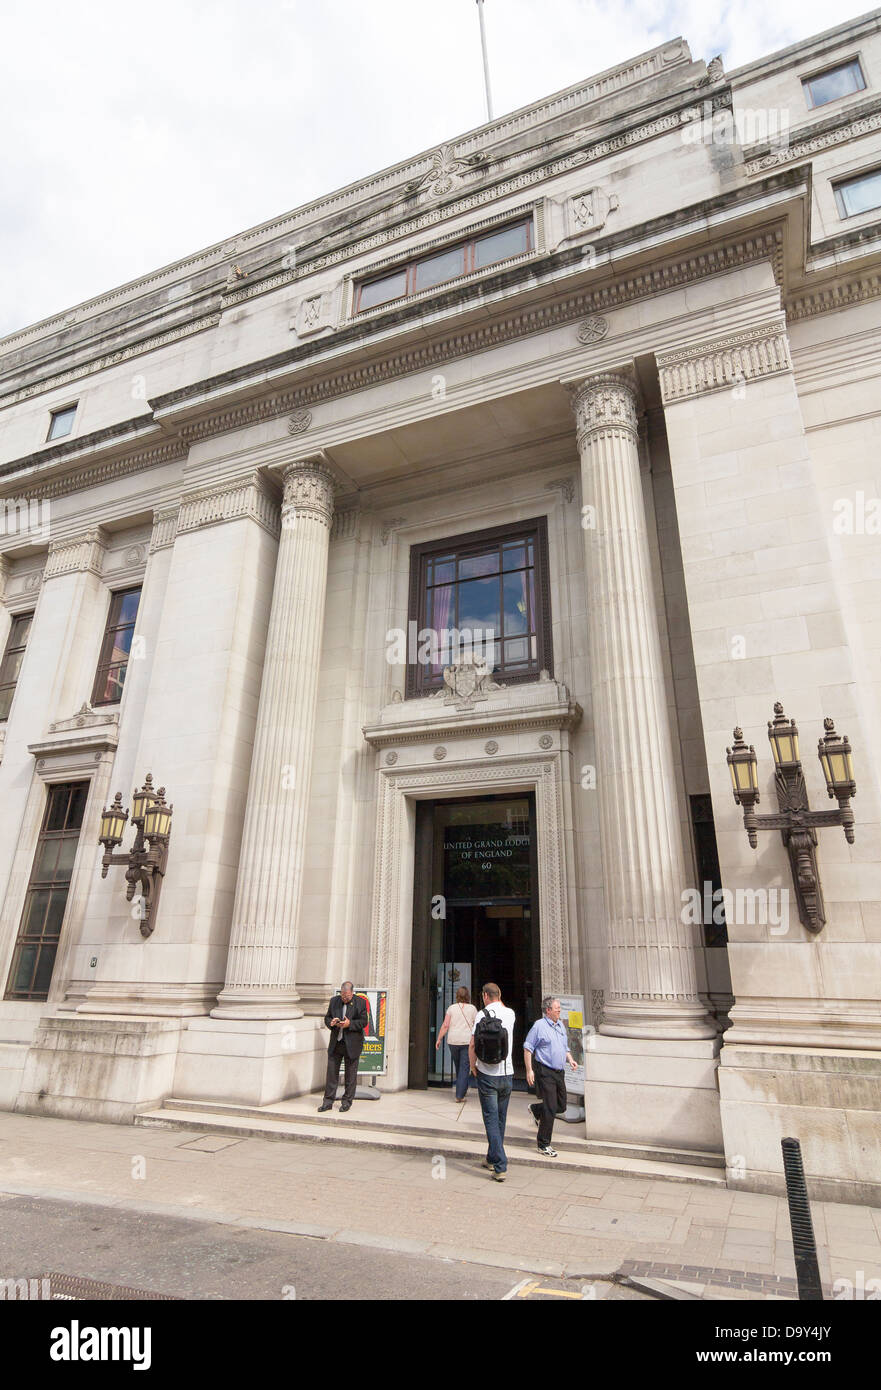 L'entrée de Freemasons Hall, le Great Queen Street, Covent Garden home de la Grande Loge Unie d'Angleterre. Banque D'Images